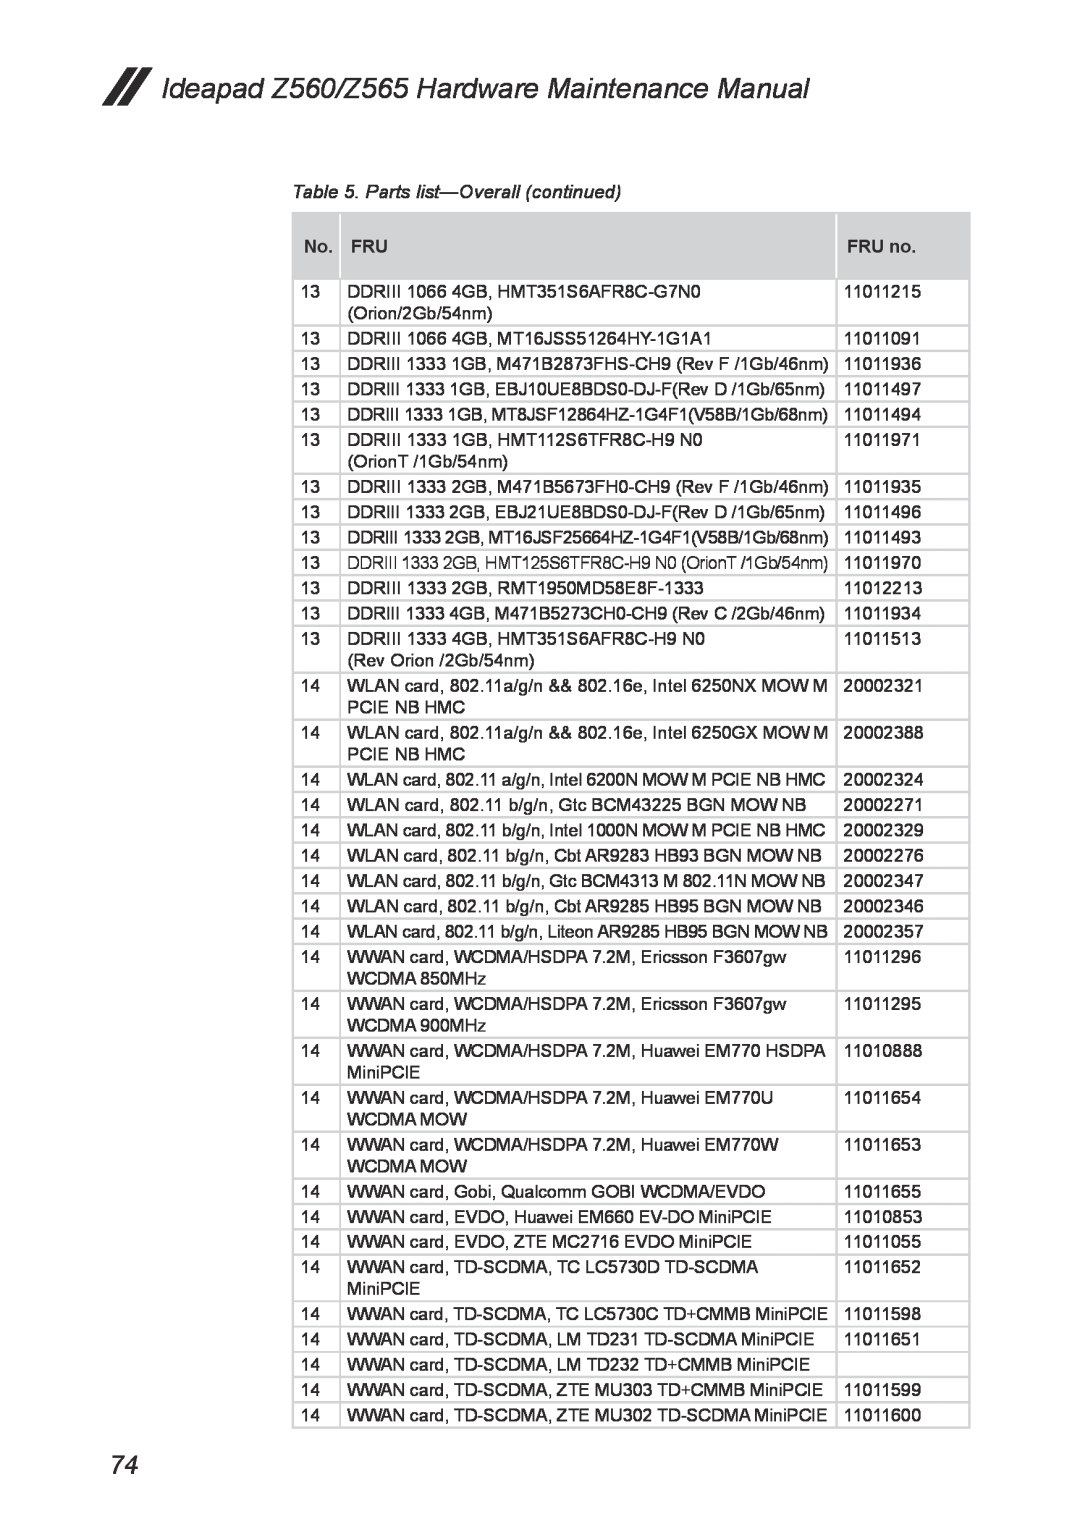 Lenovo manual Parts list-Overall continued, Ideapad Z560/Z565 Hardware Maintenance Manual 